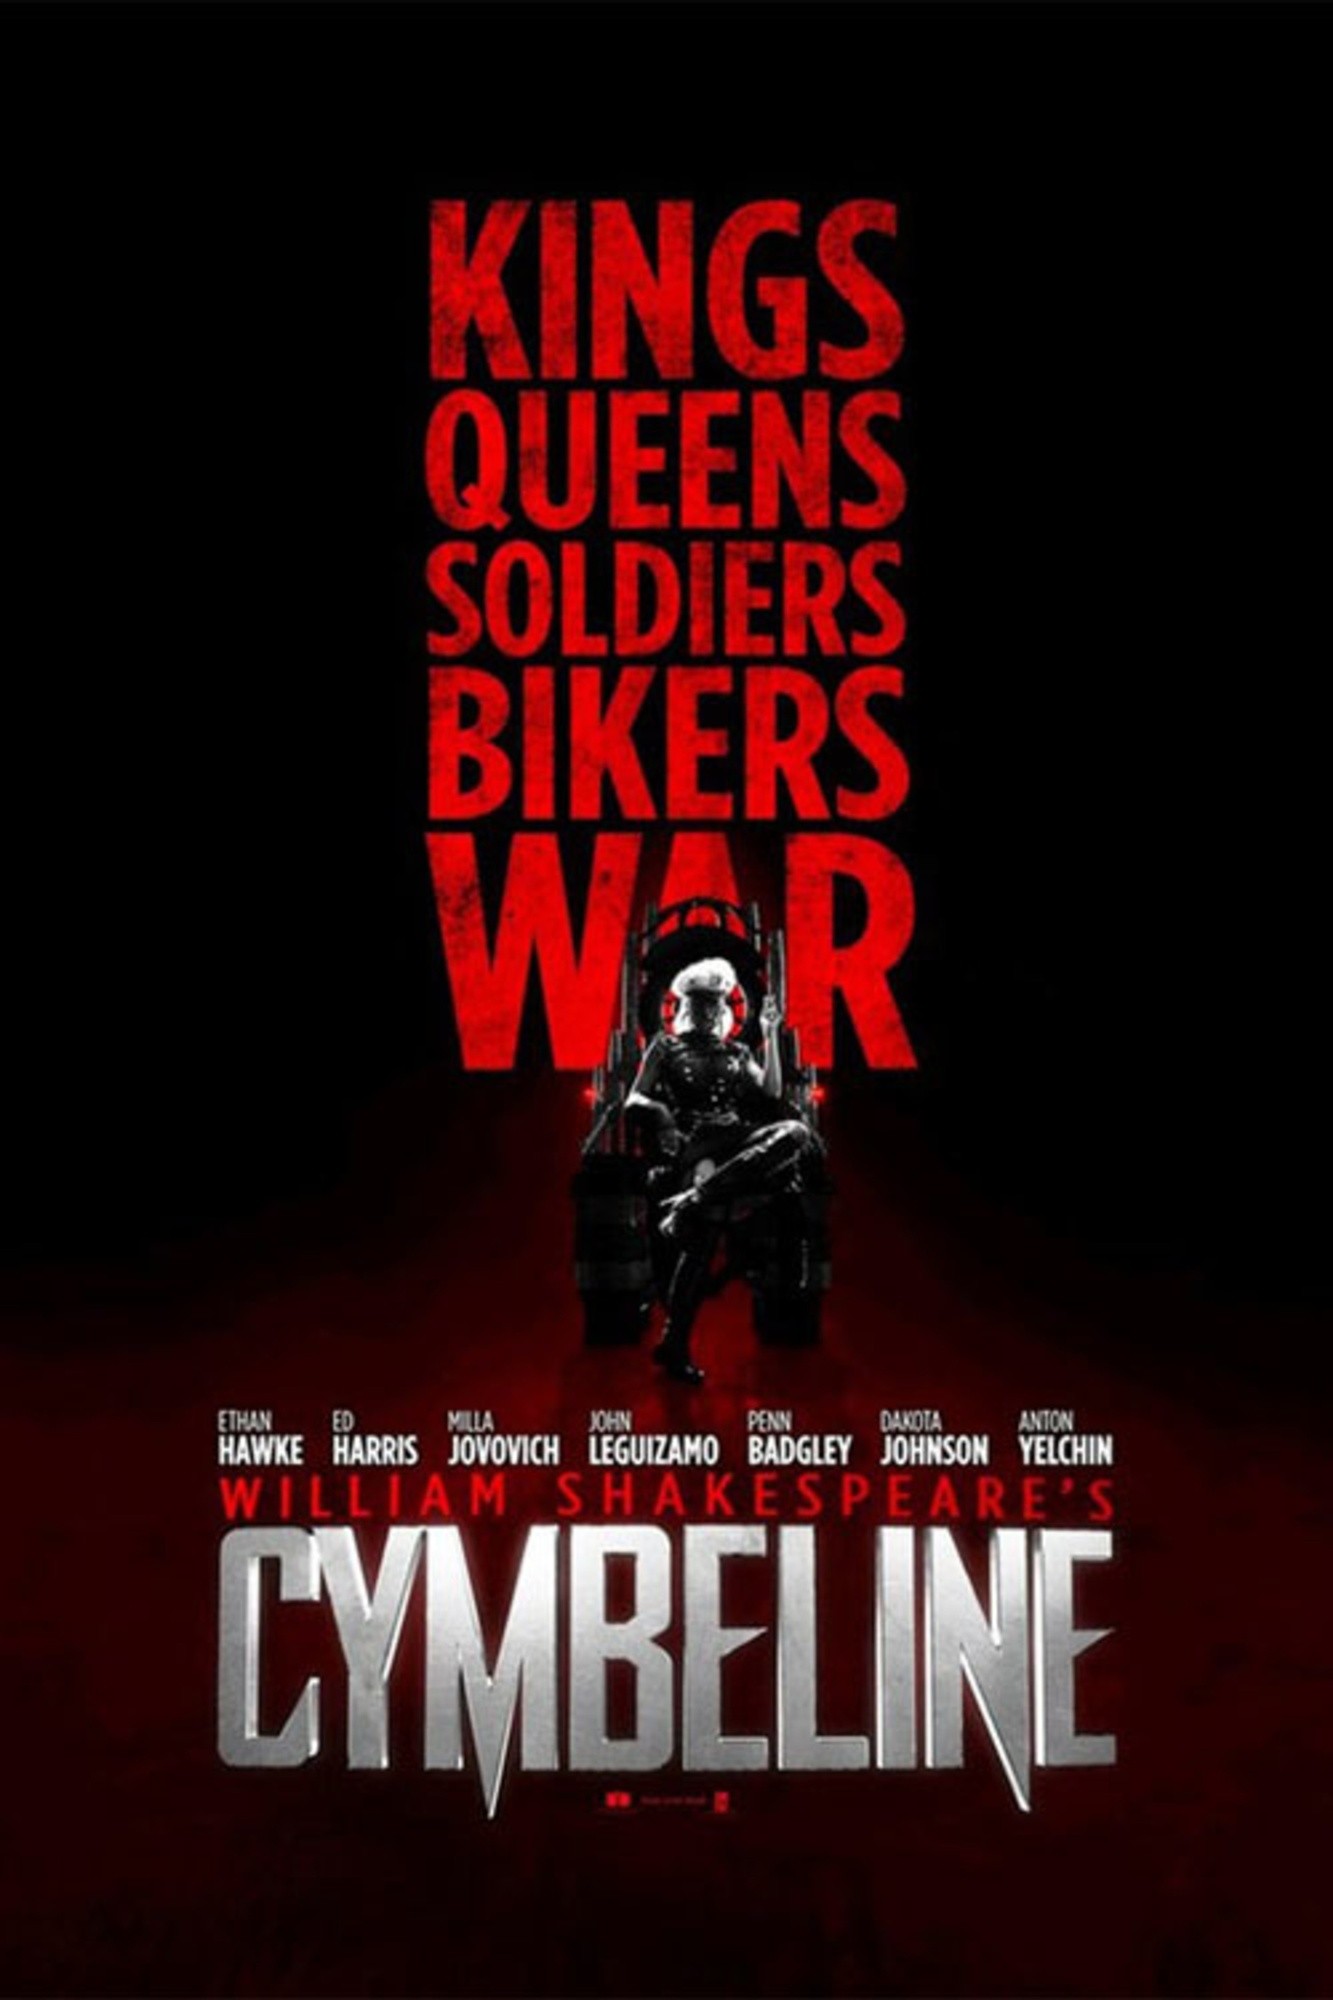 Poster of Lionsgate Films' Cymbeline (2015)